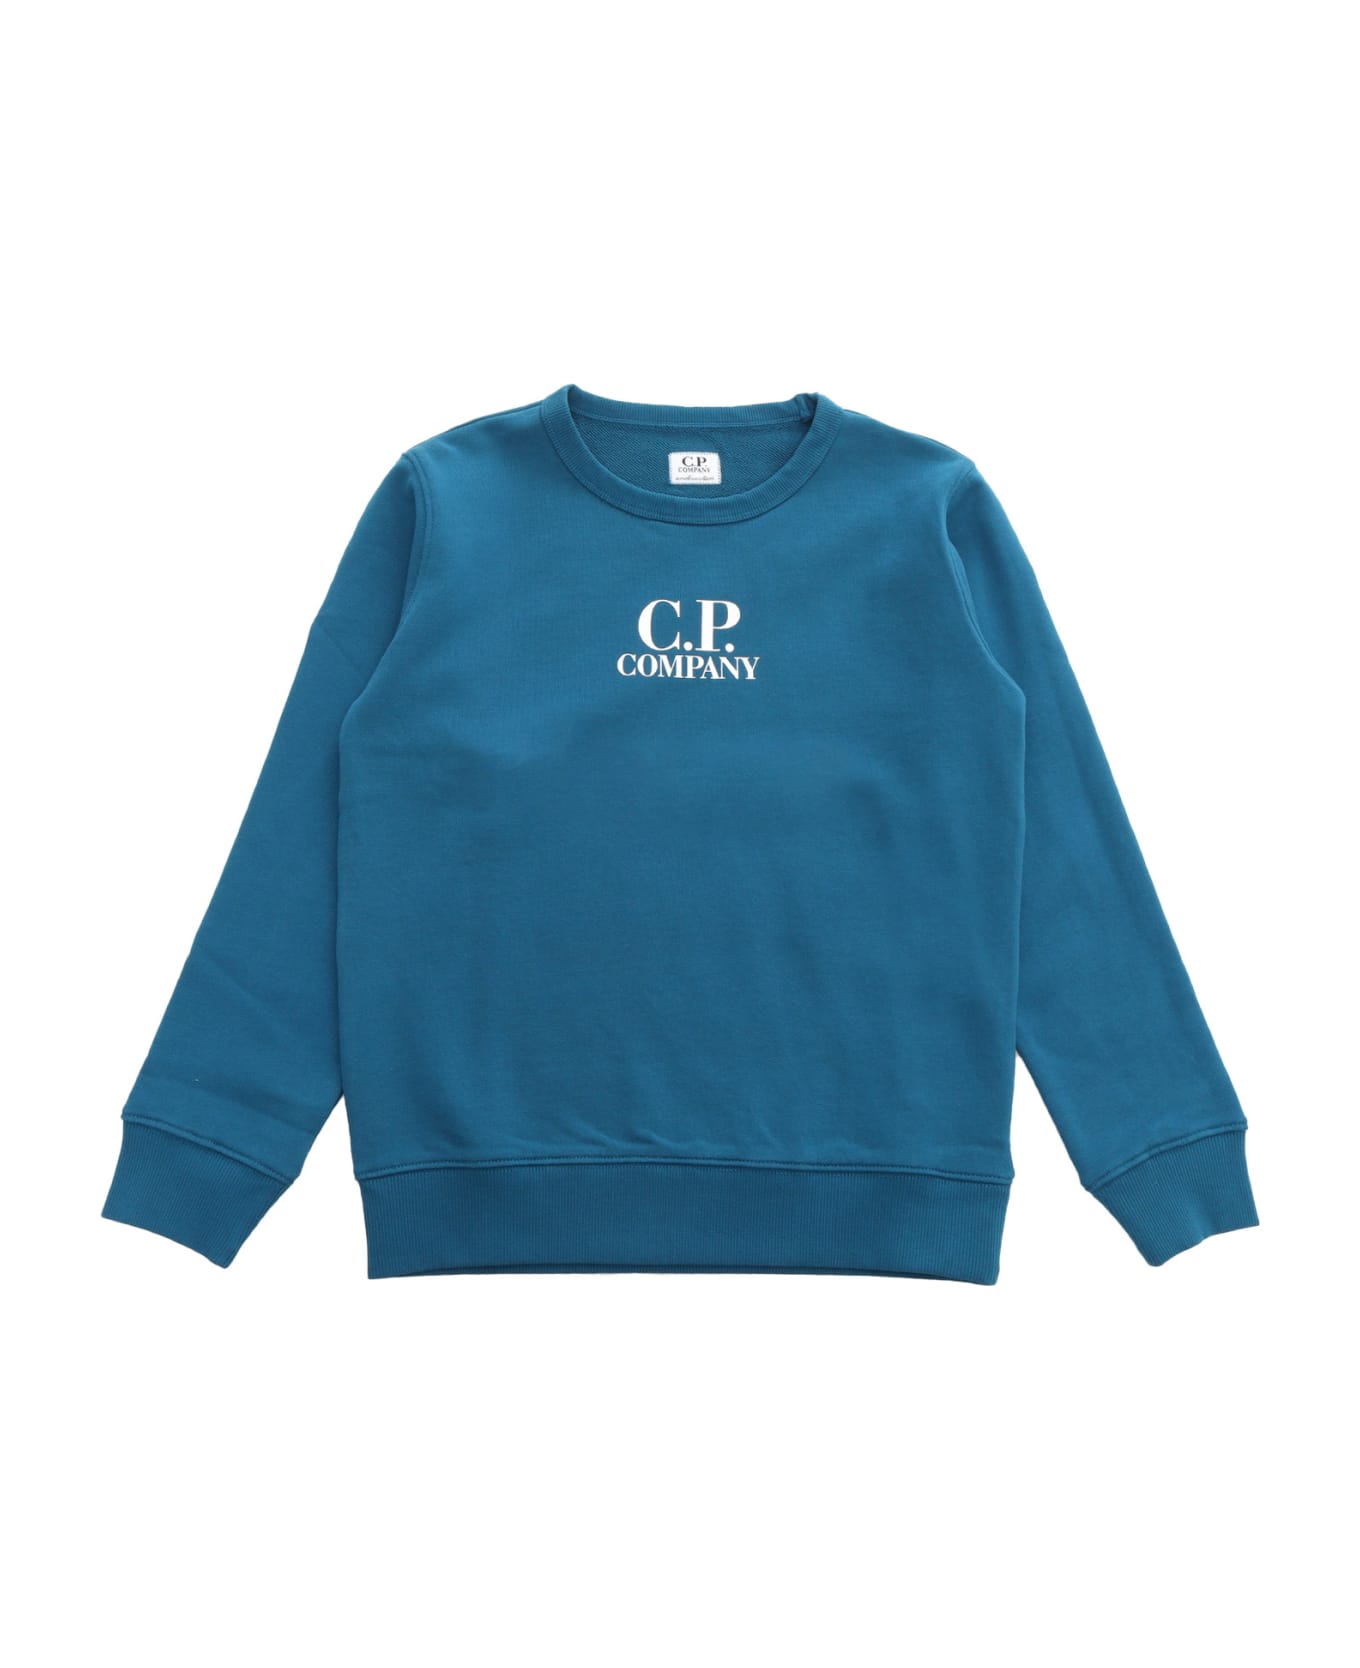 C.P. Company Undersixteen Blue Sweatshirt - BLUE